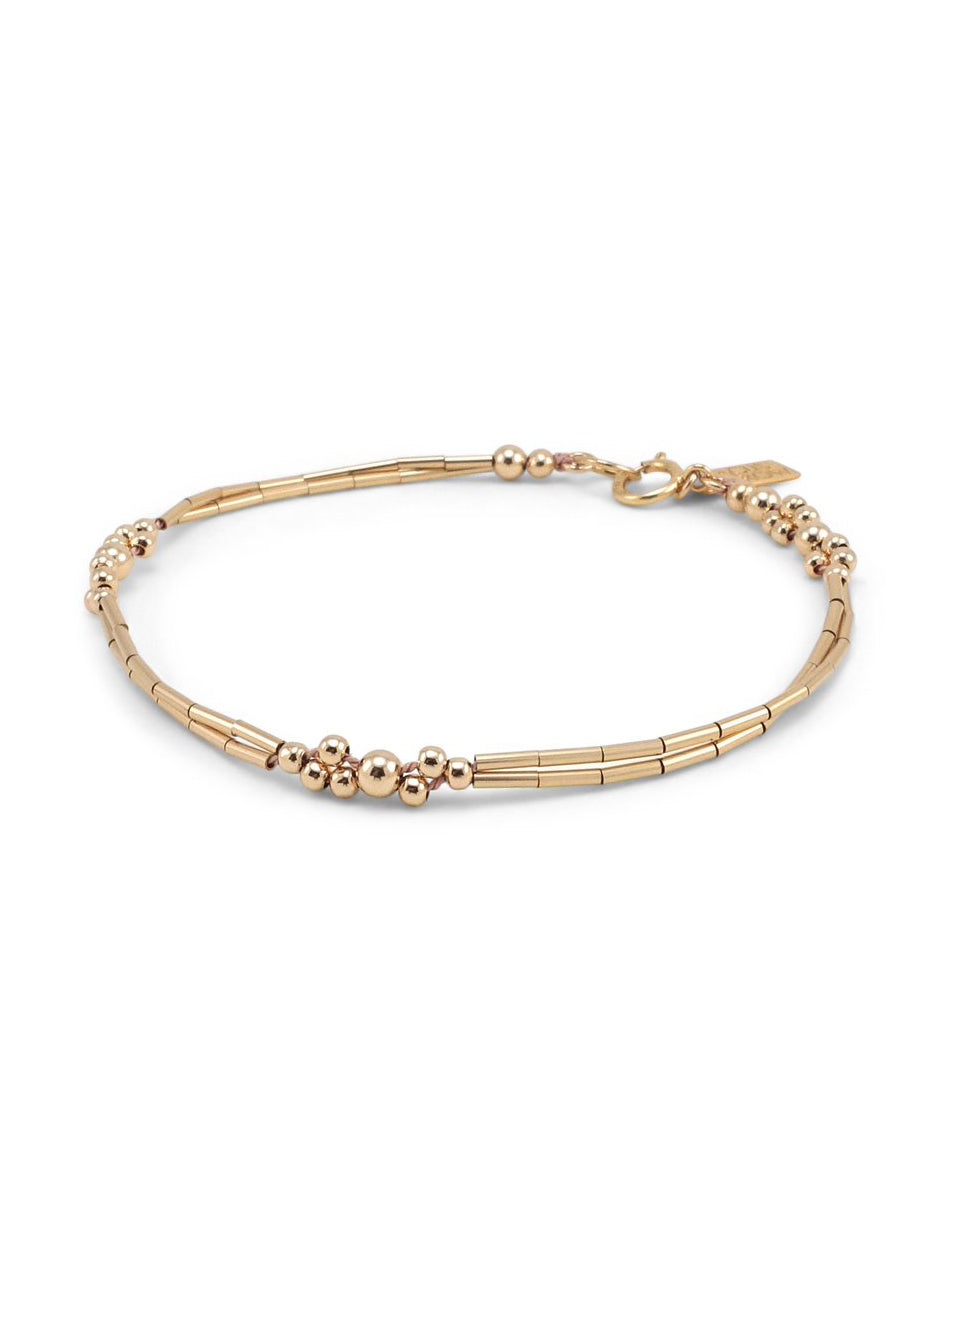 Gold Beaded Bracelet Abacus Row Subra Bracelet